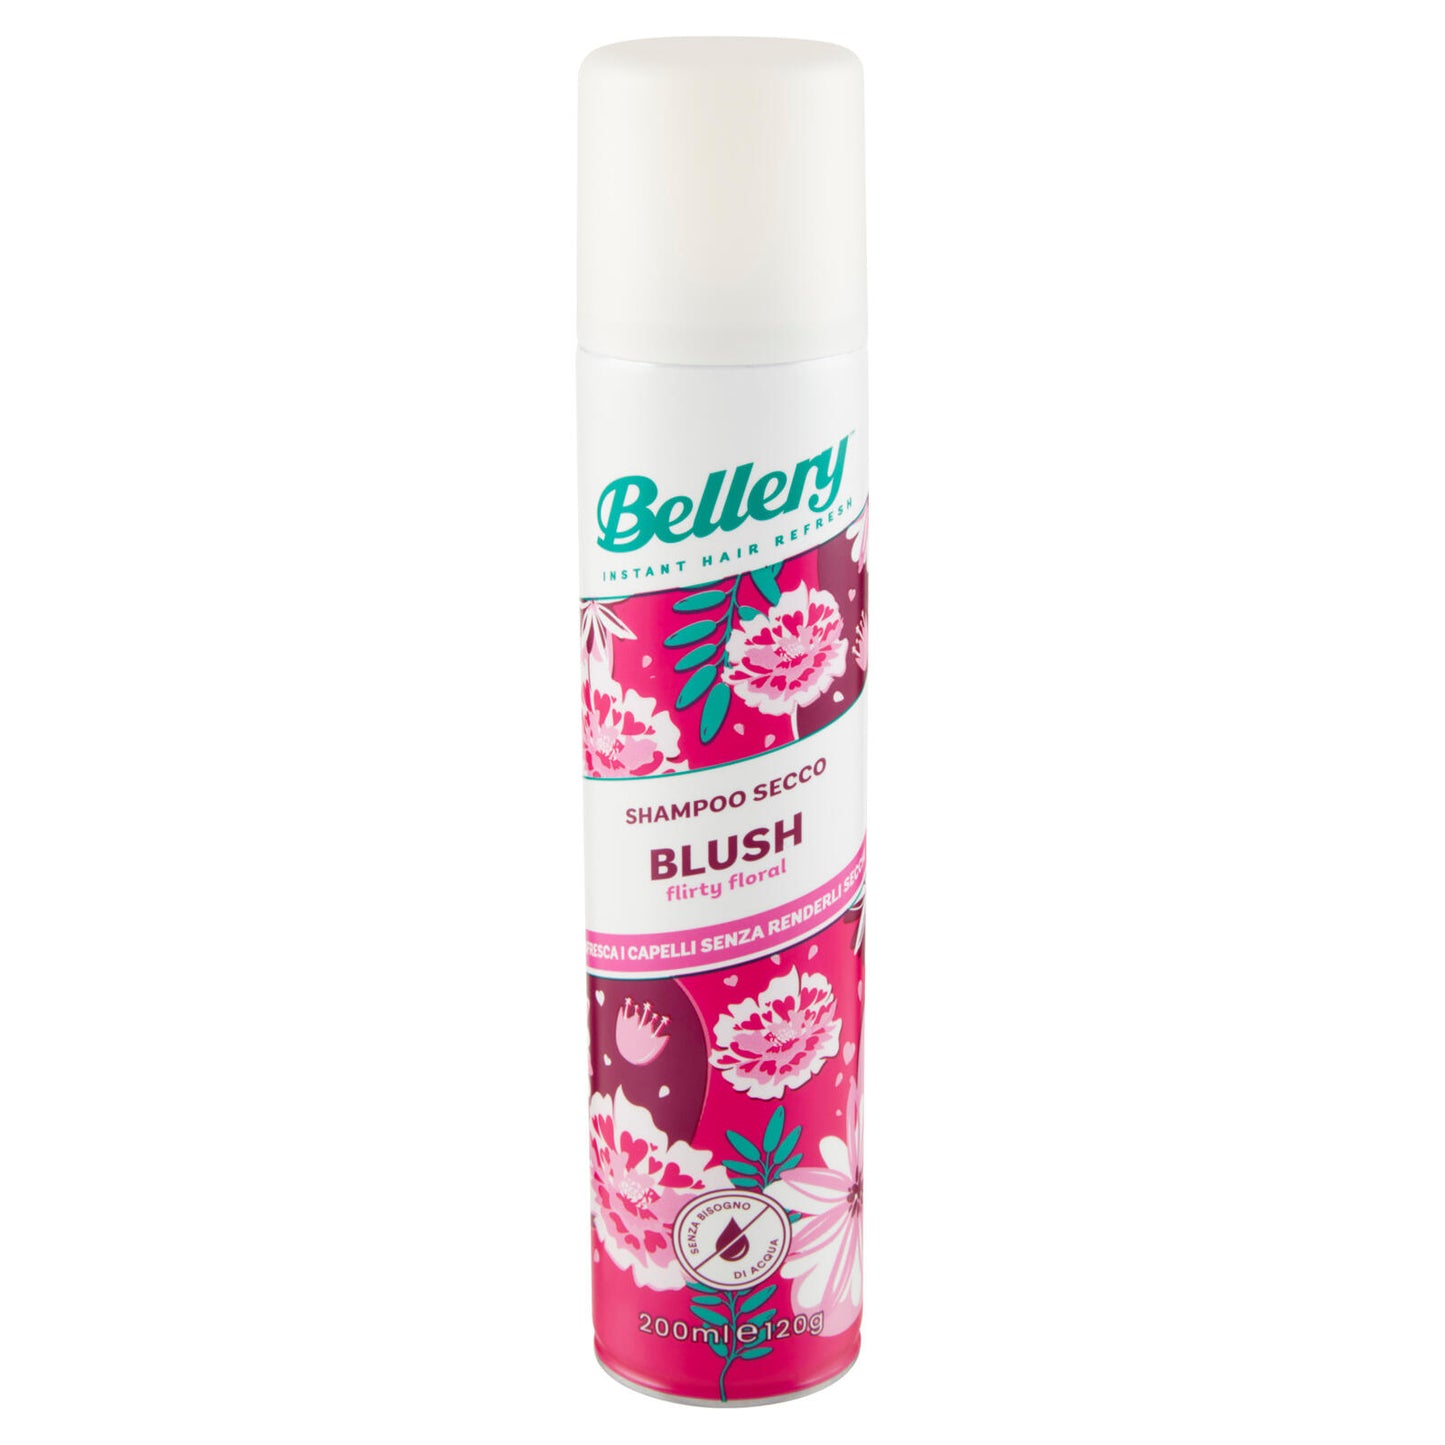 Bellery Shampoo Secco Blush flirty floral 200 ml